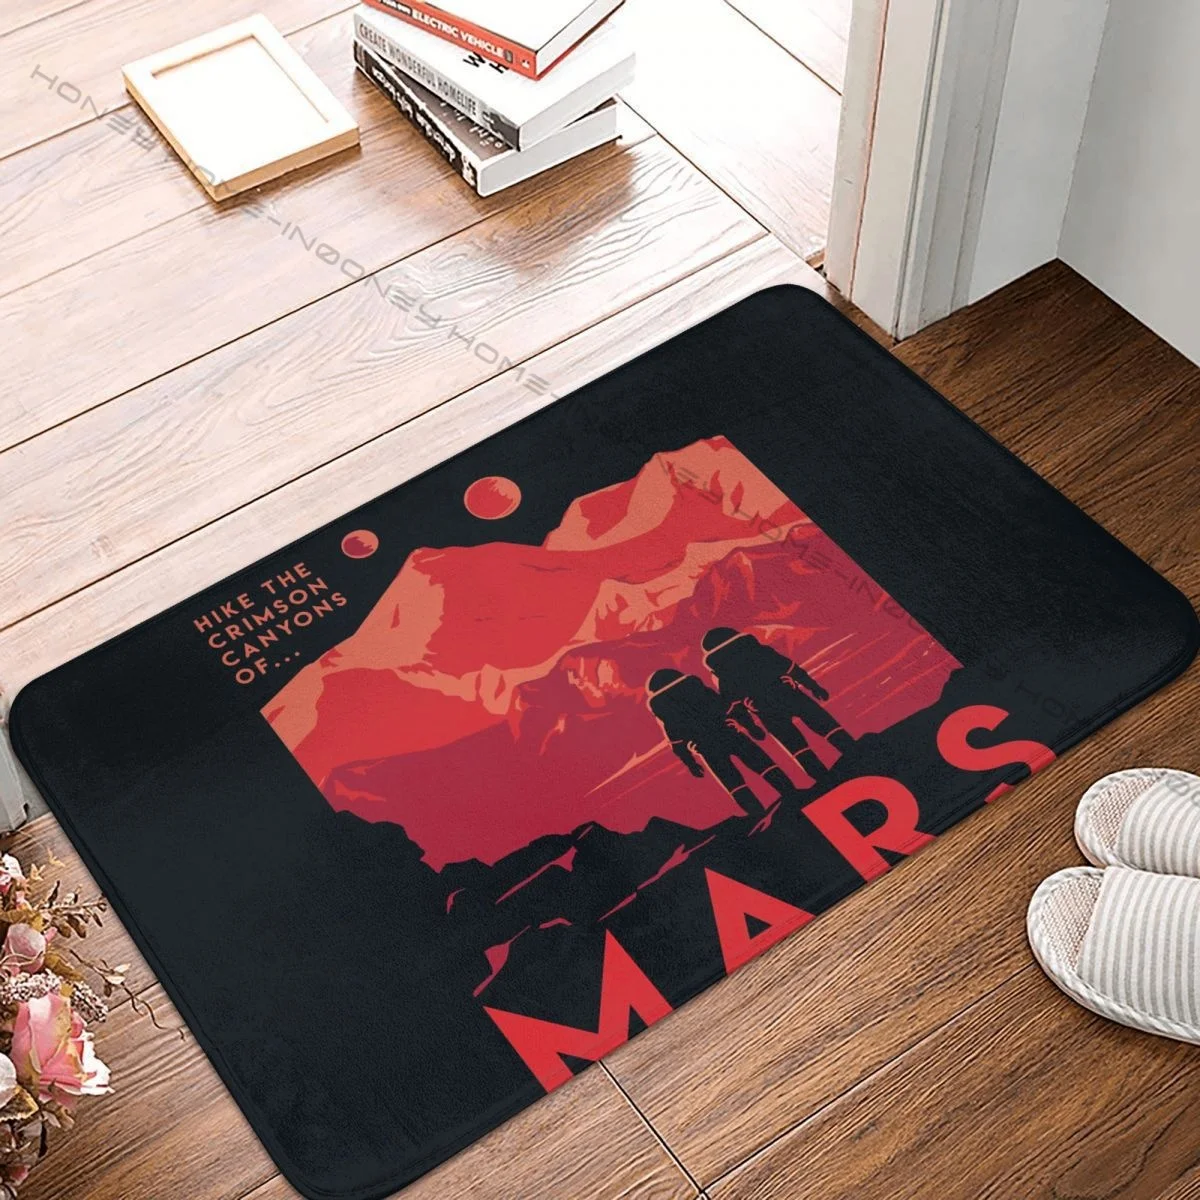 

Occupy Mars 2026 To The Moon Bedroom Mat National Park Doormat Living Room Carpet Entrance Door Rug Home Decor